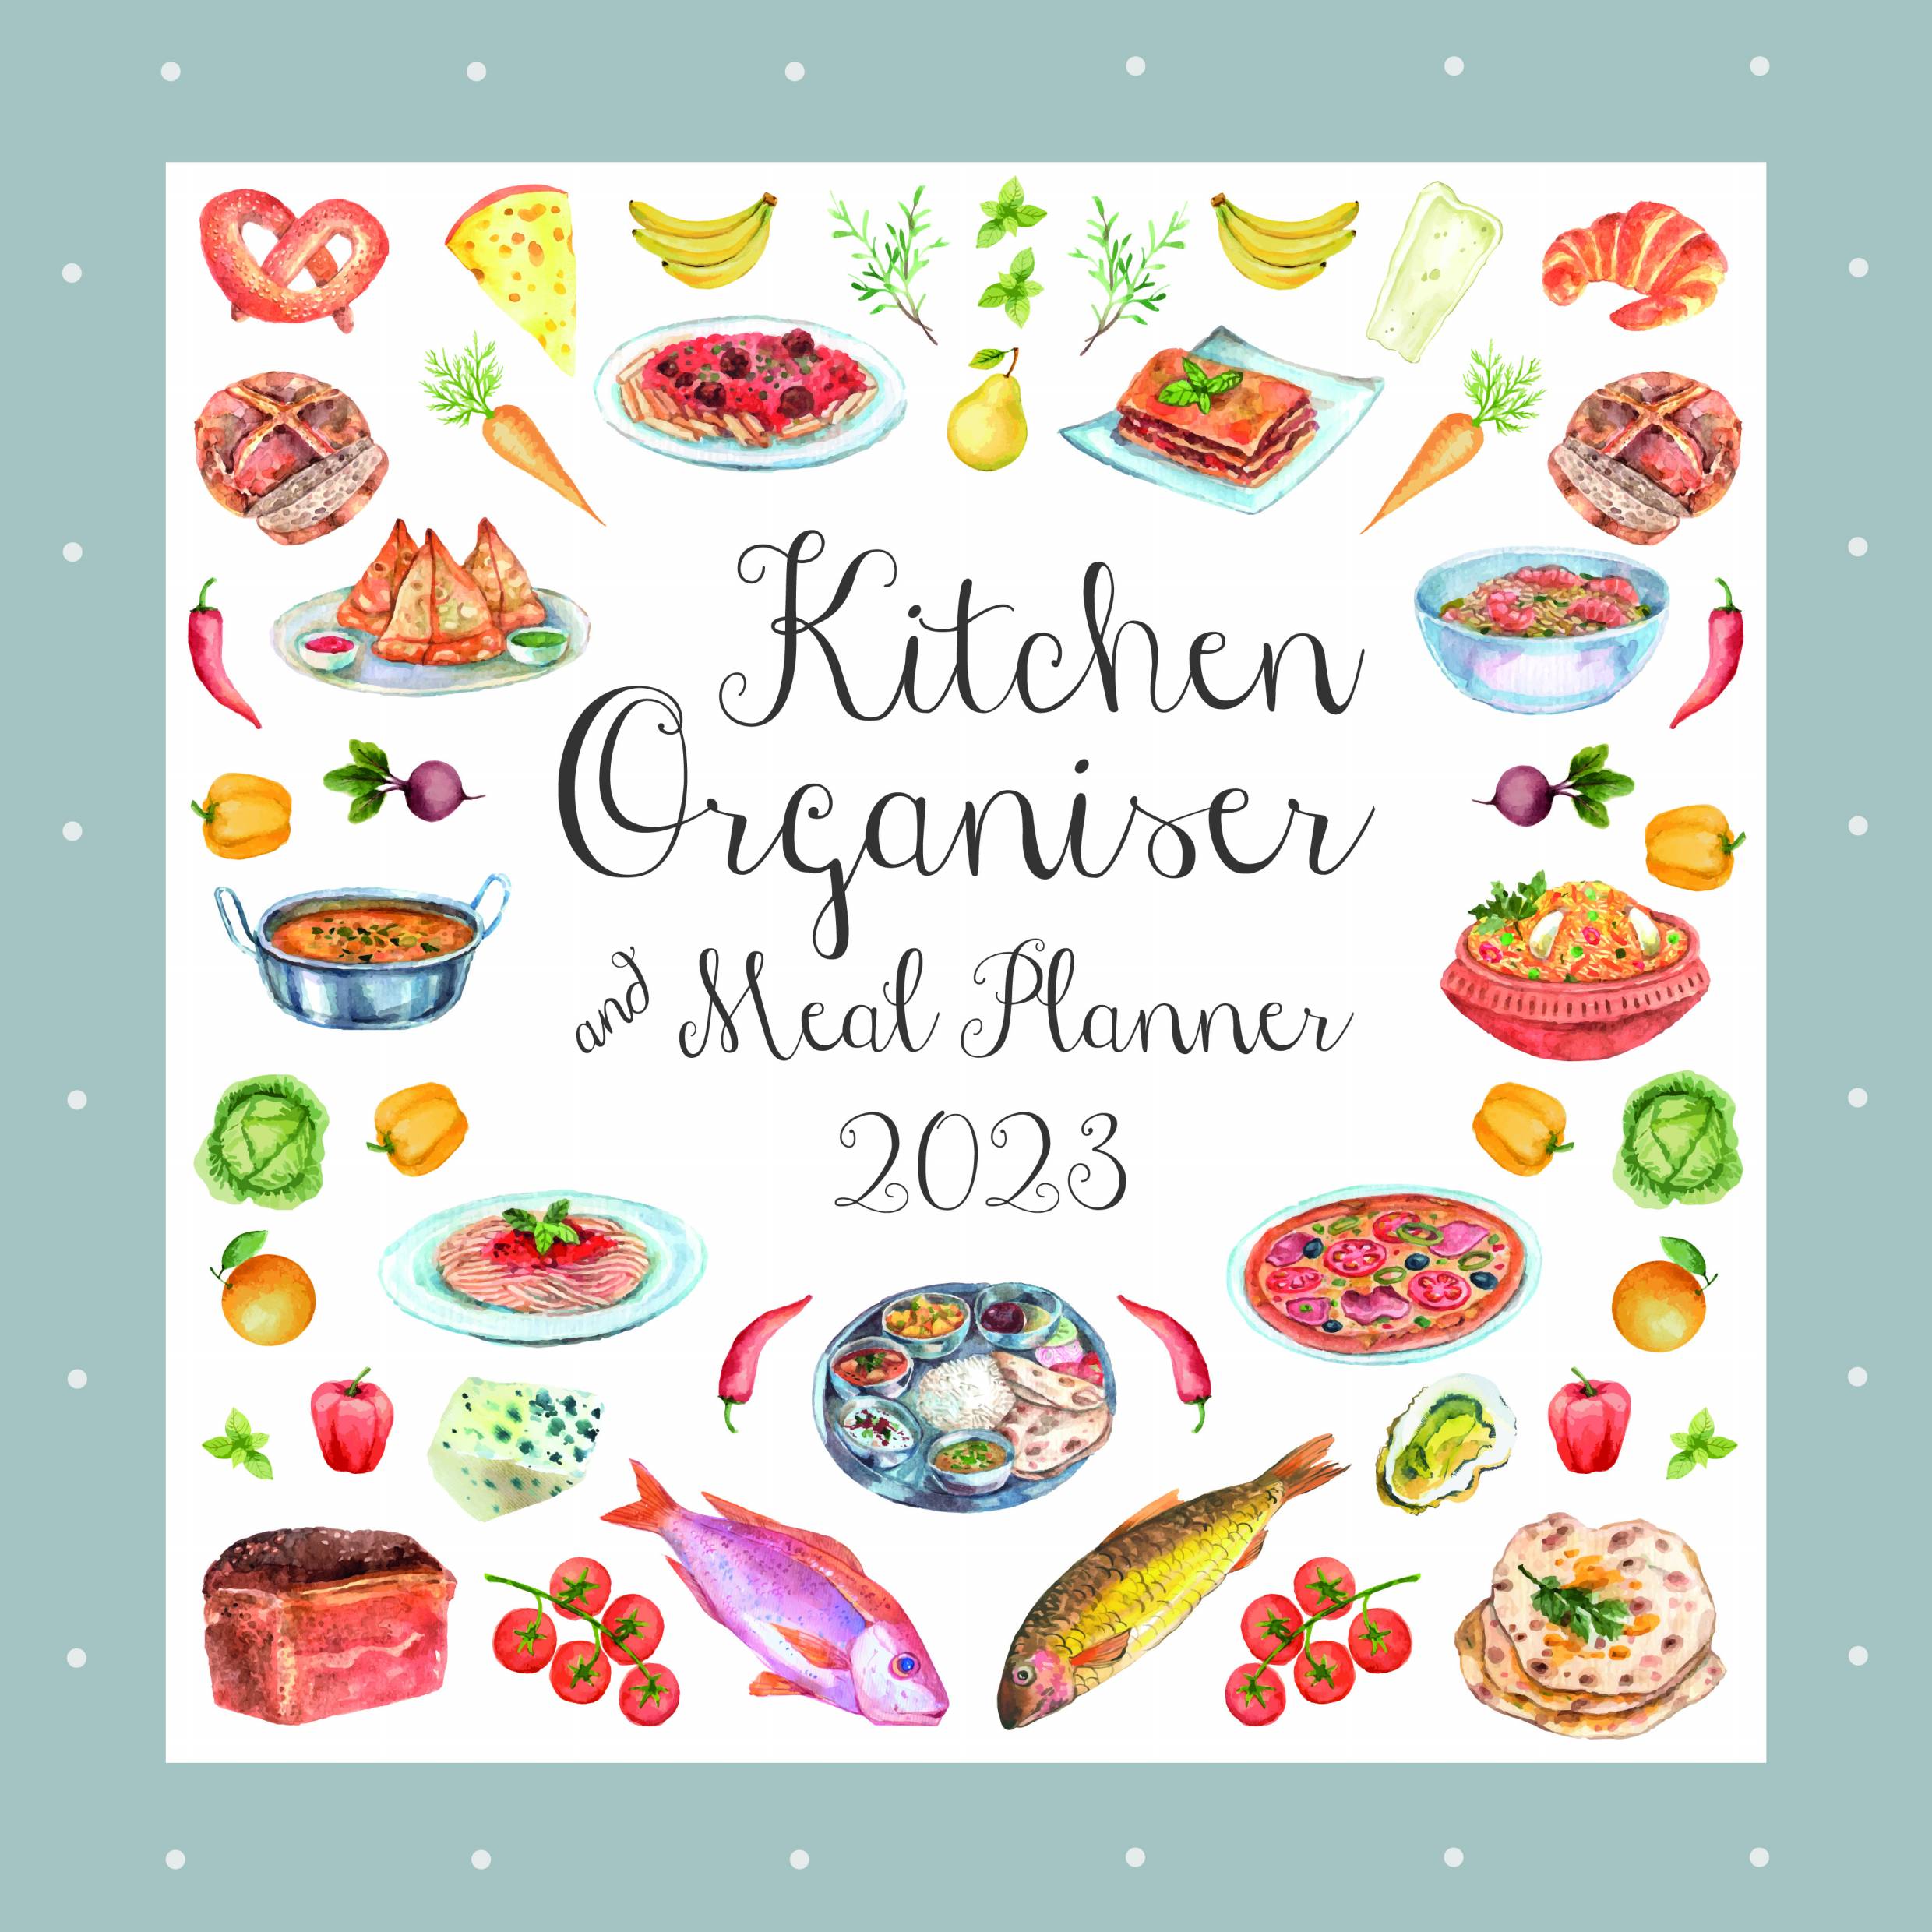 2023 Kitchen Organiser & Meal Planner - Square Wall Calendar